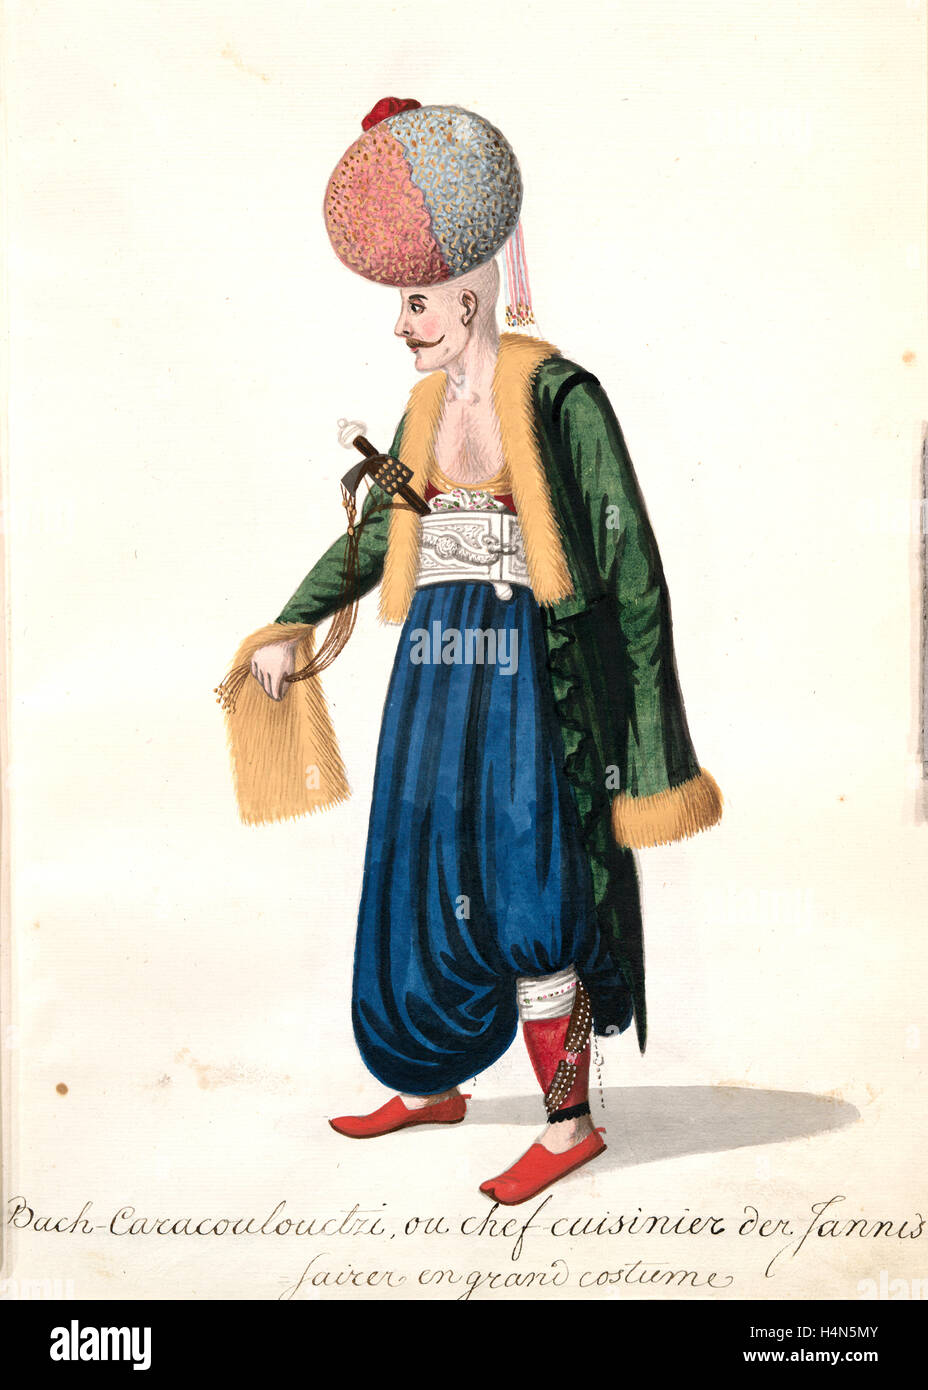 Bach-Caracoulouctri [Bash Karakullukchu], Ou Küchenchef cuisinier des Jannissaires de grand Kostüm. [42], Mahmud II Stockfoto